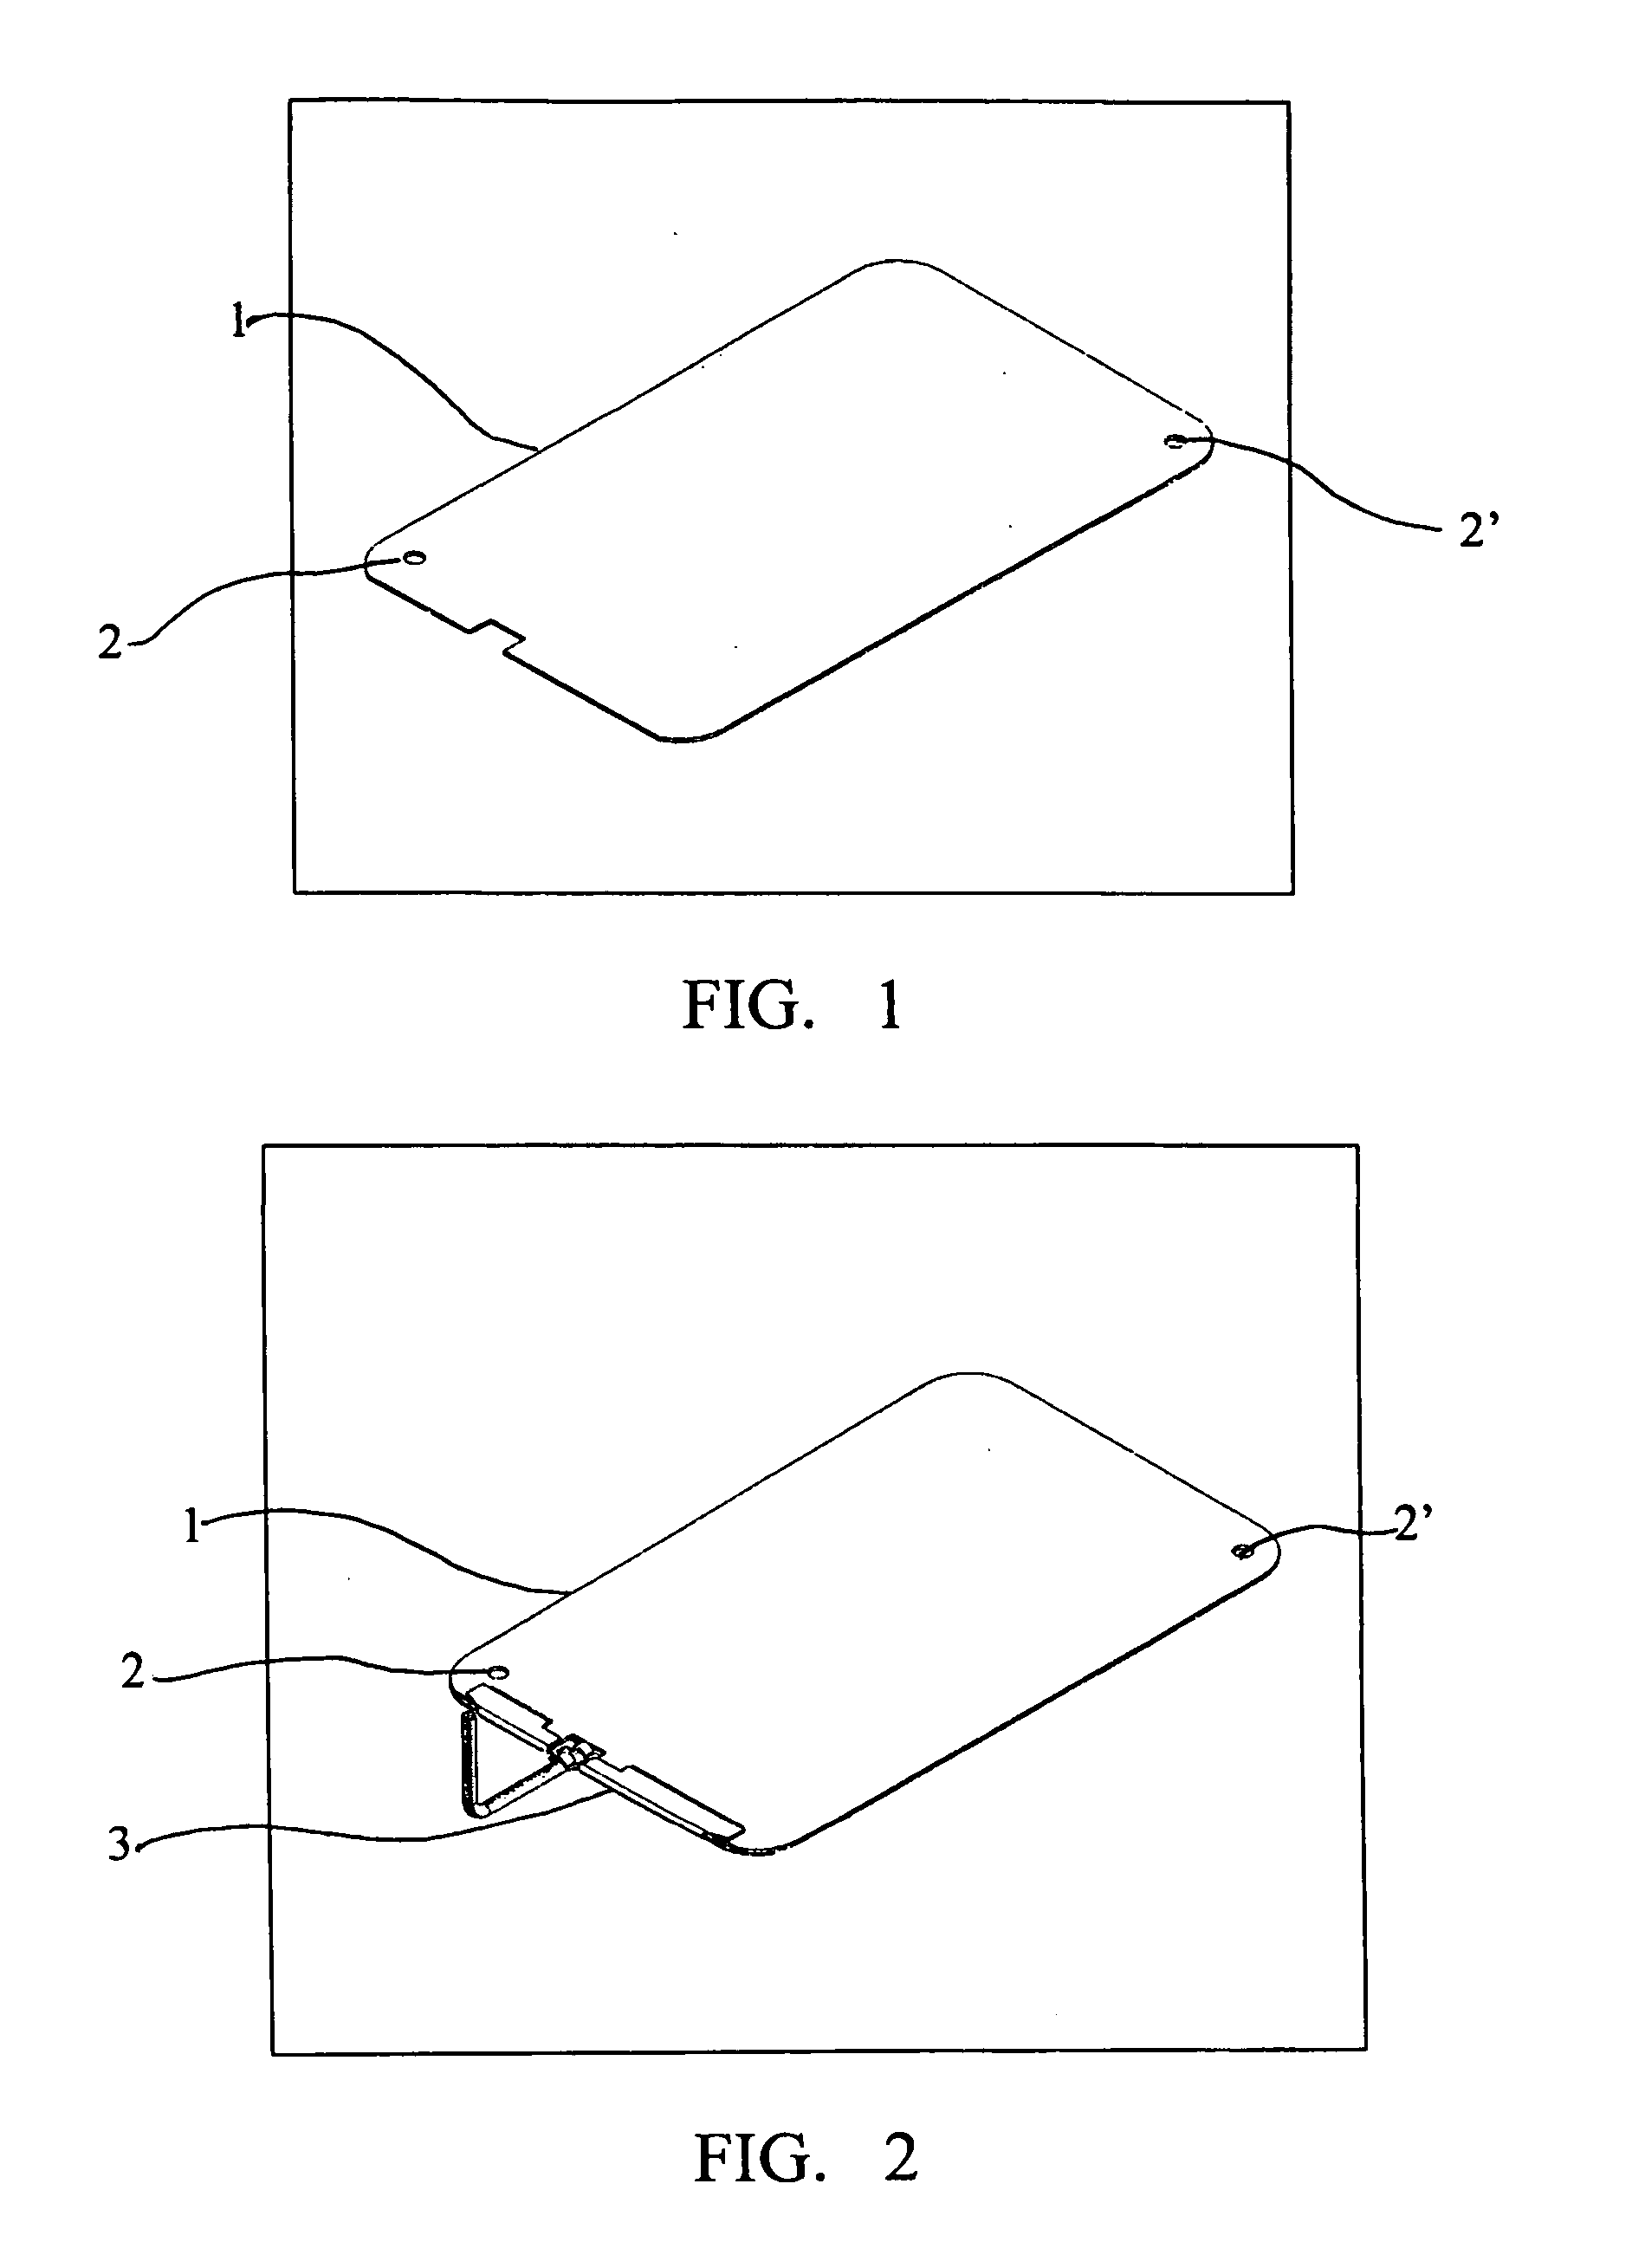 Process for making a framed electrode